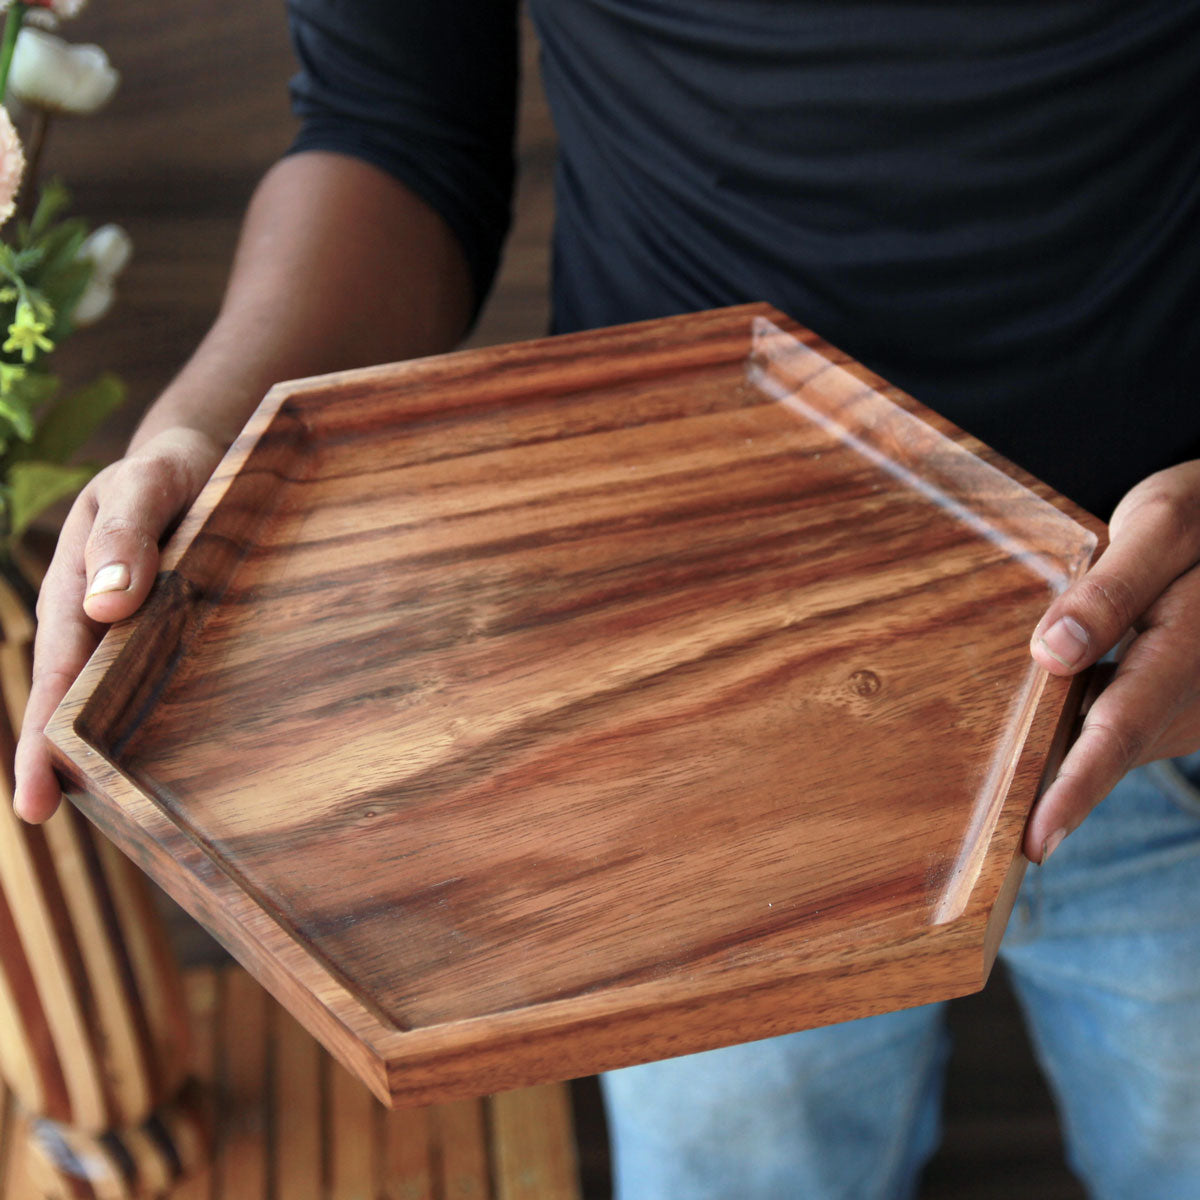 Hexagonal Wooden Serving Tray | Minimalist Wood Decorative Tray